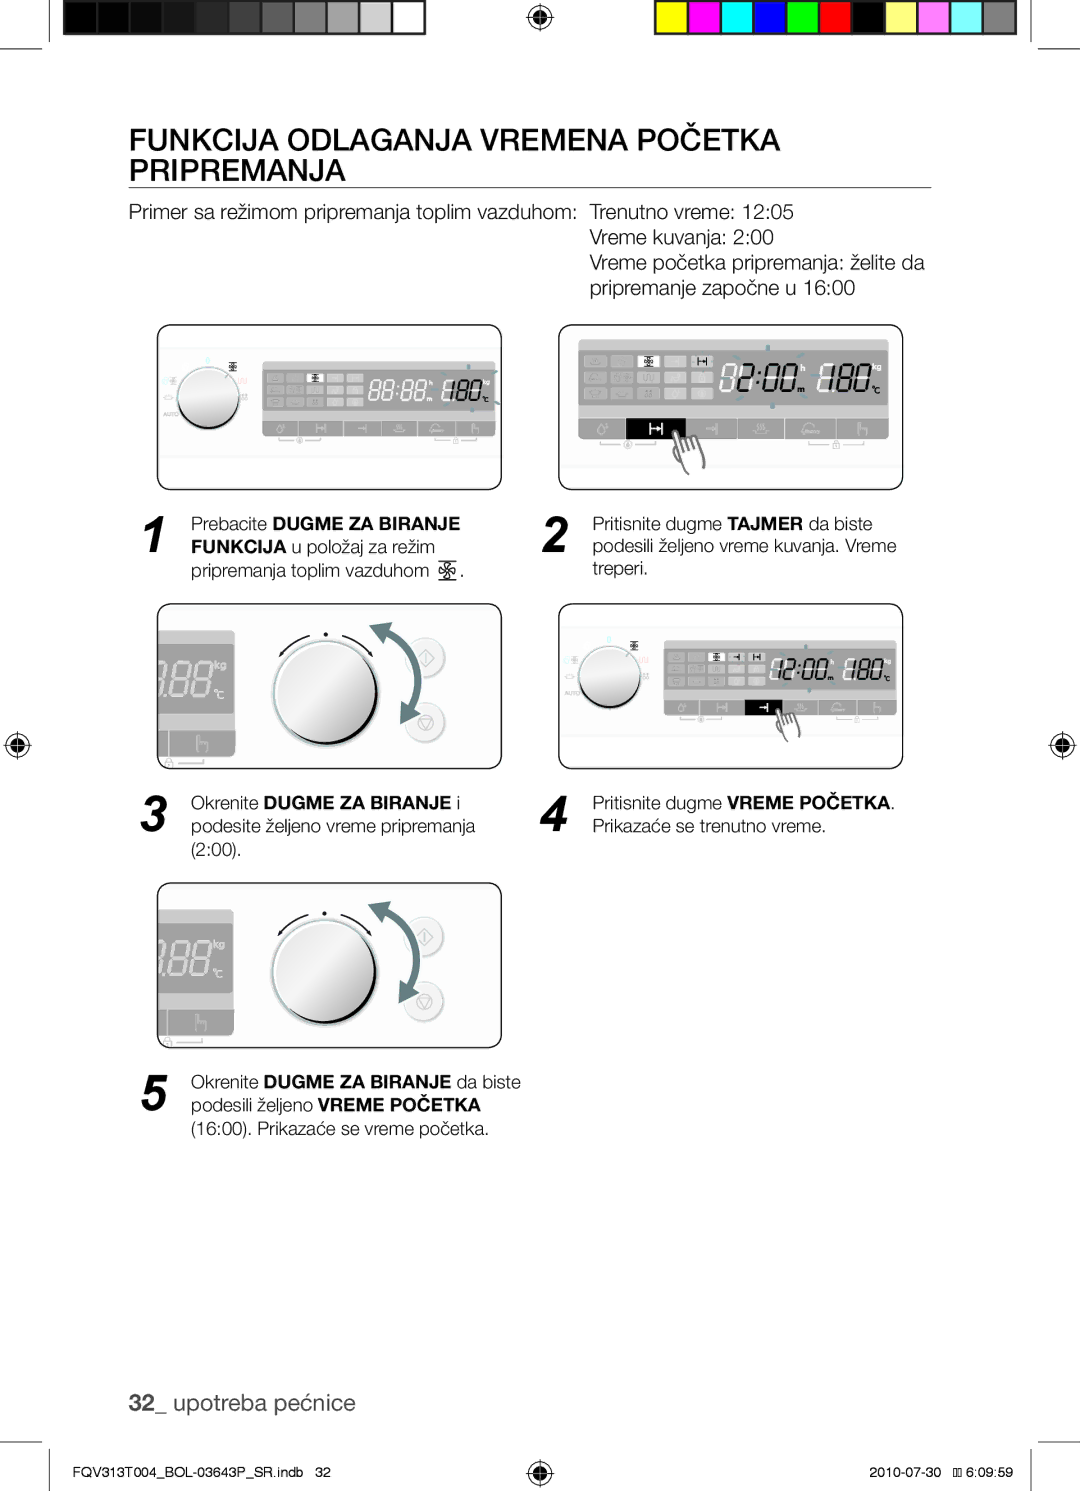 Samsung FQV313T004/BOL manual Funkcija odlaganja vremena početka pripremanja 